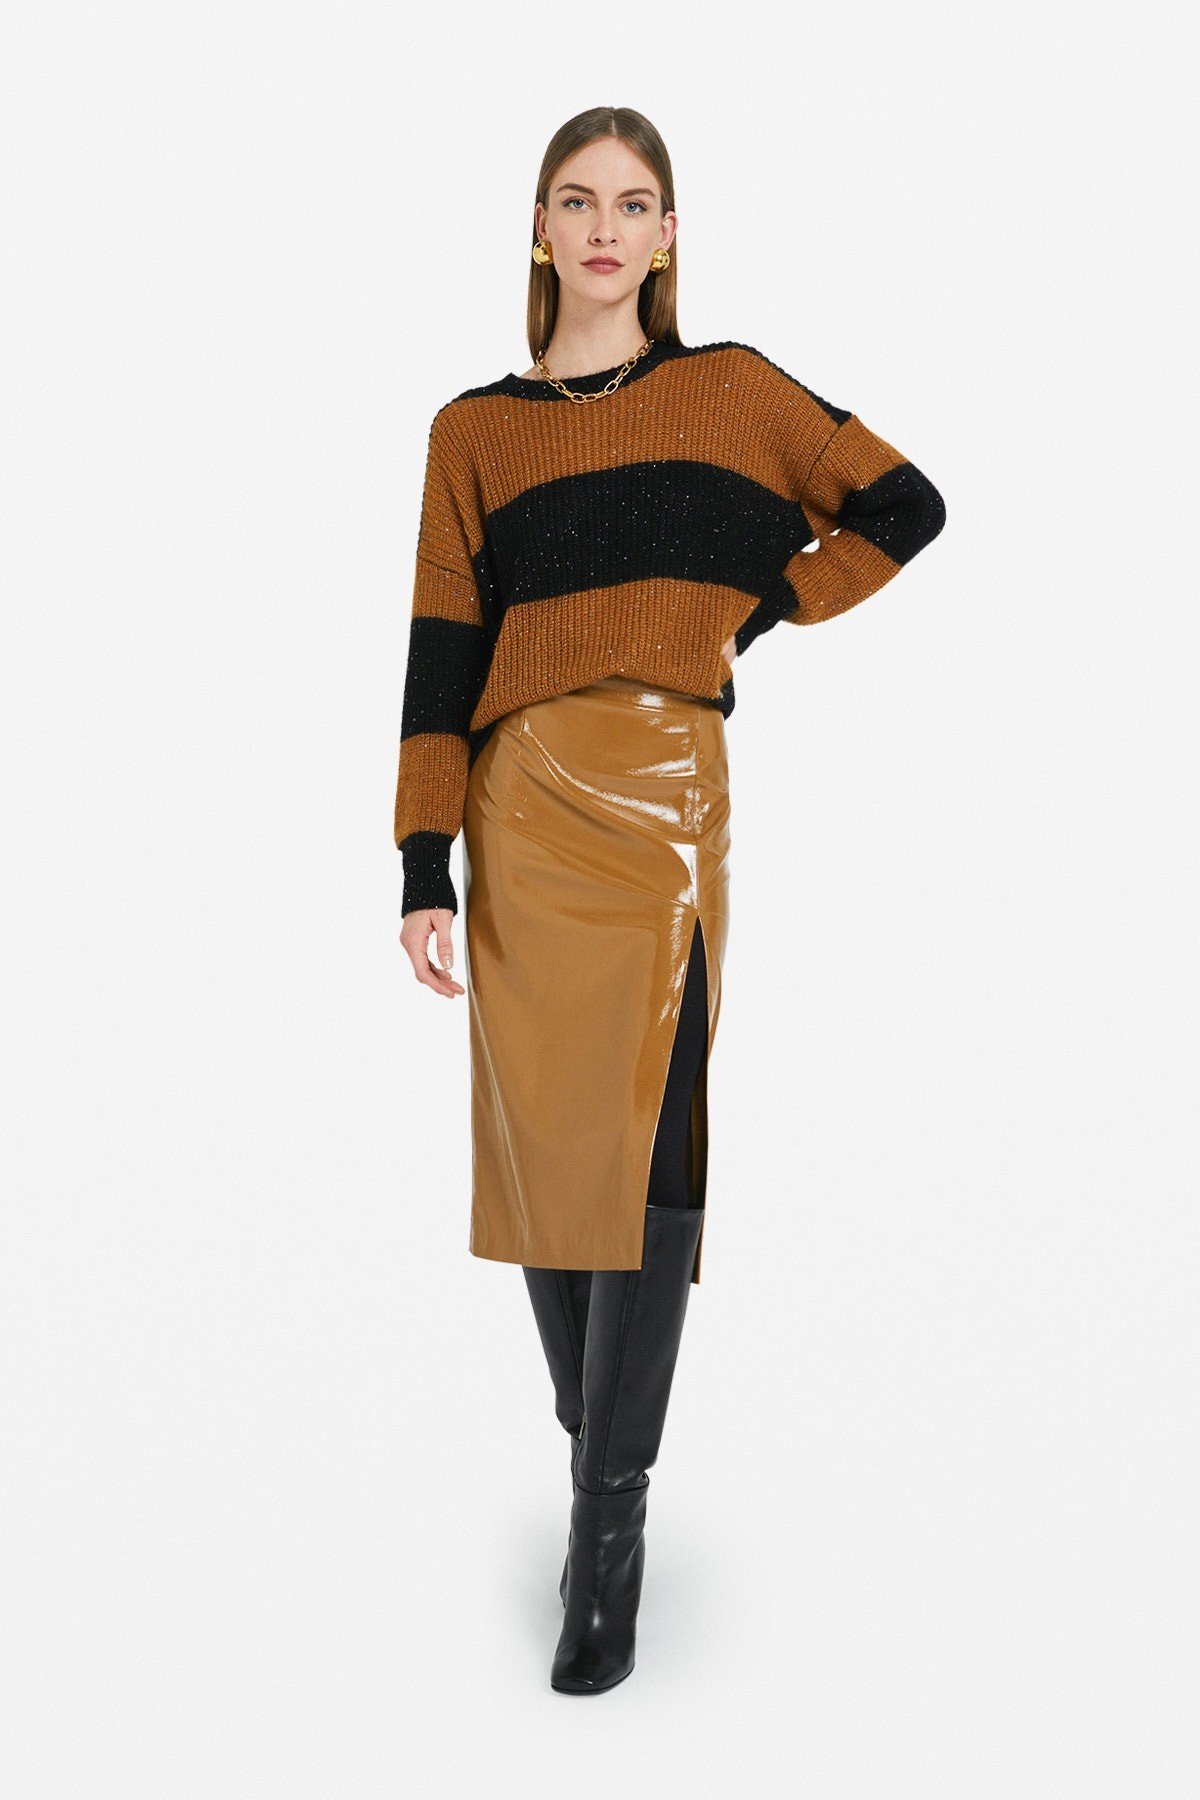 Patent leather midi skirt